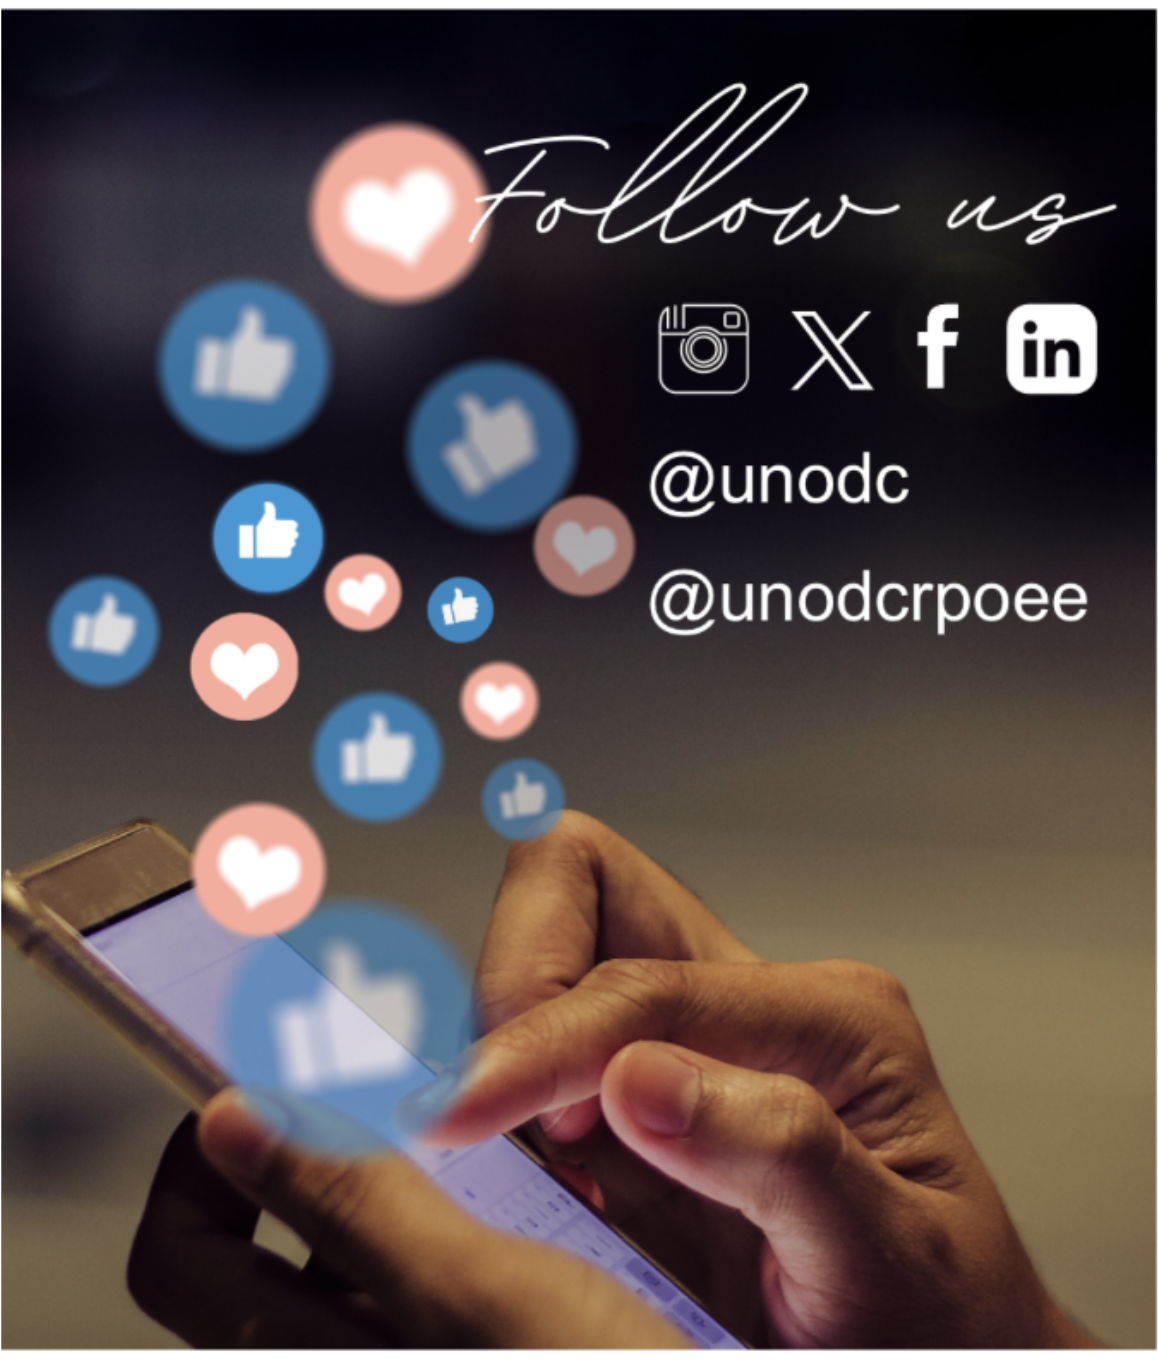 Follow @UNODCRPOEE